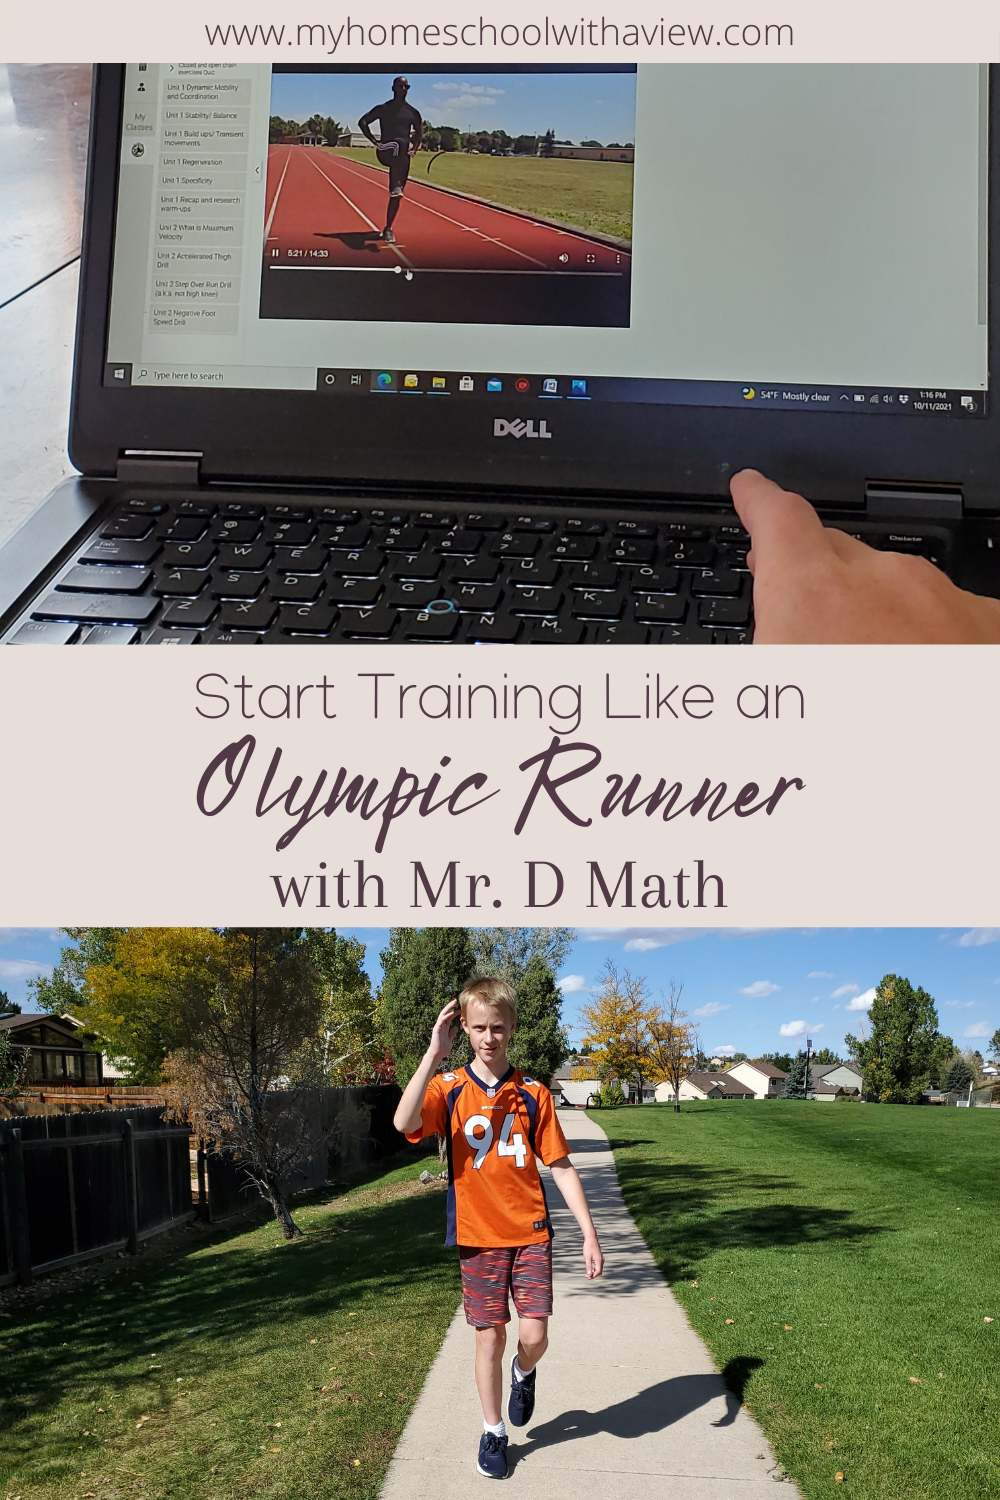 Mr. D Math Training Like an Olympic Runner Live Online Classes